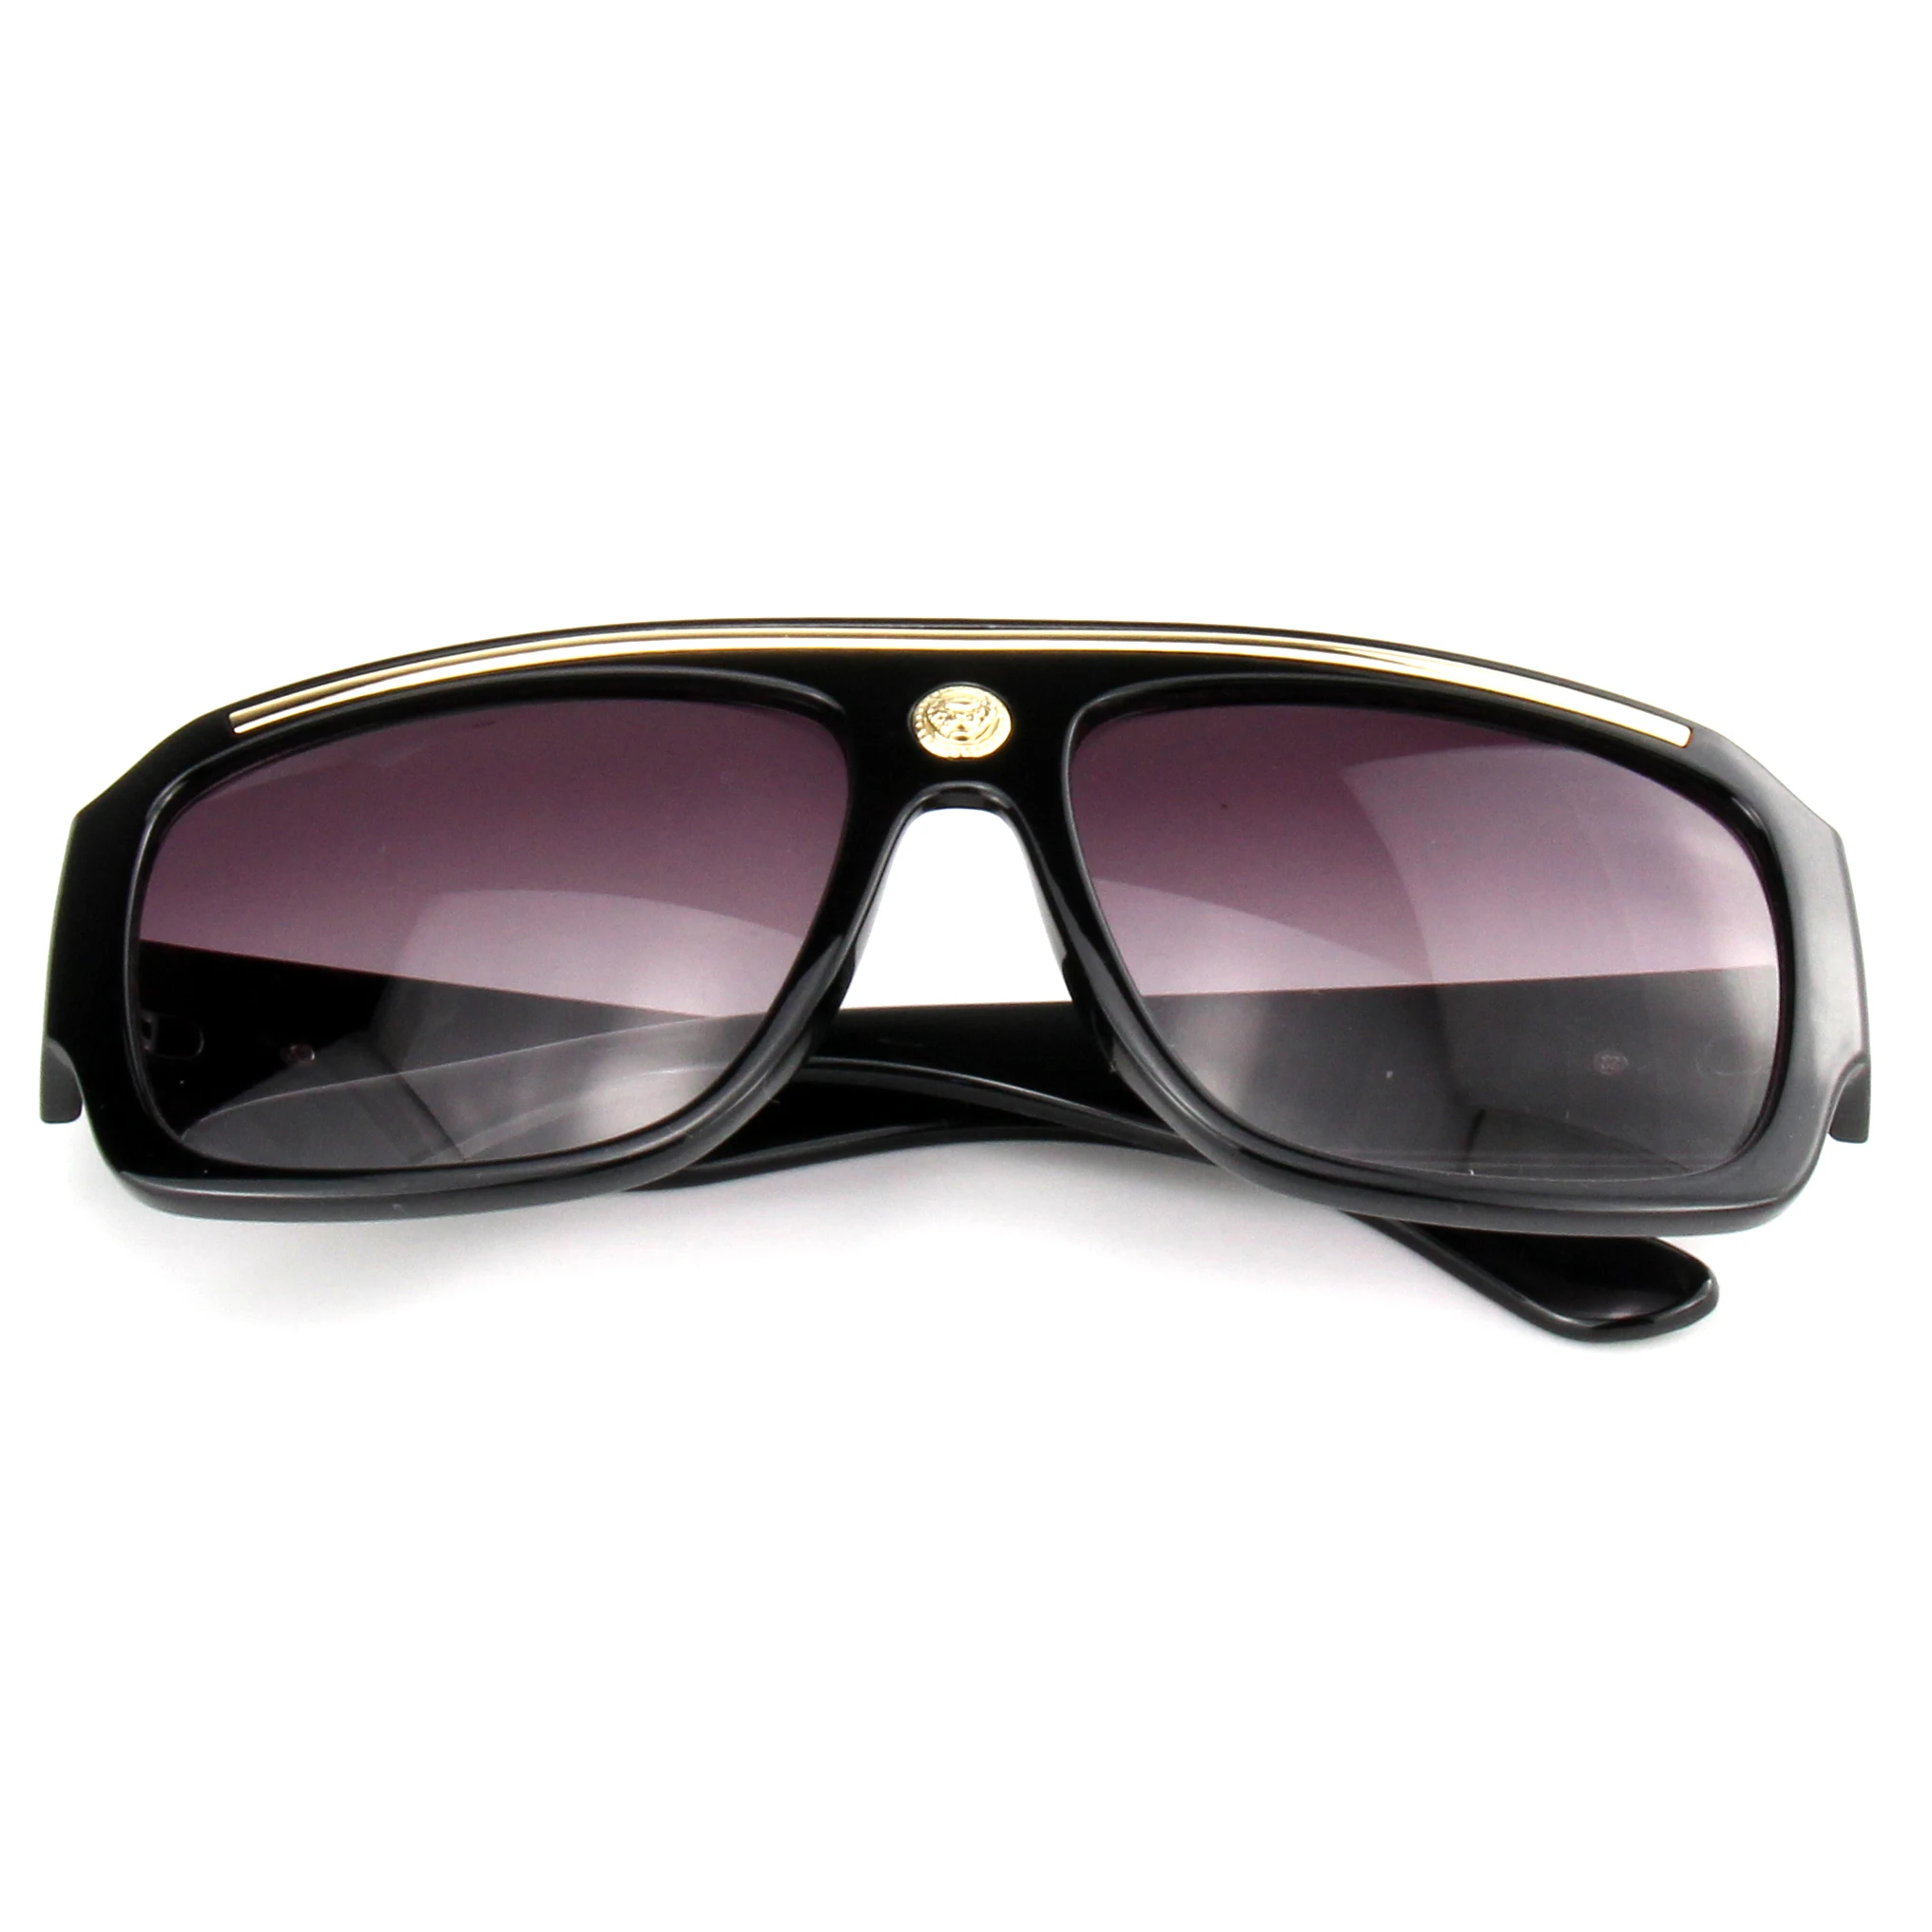 EUGENIA custom new style sunglasses 2021